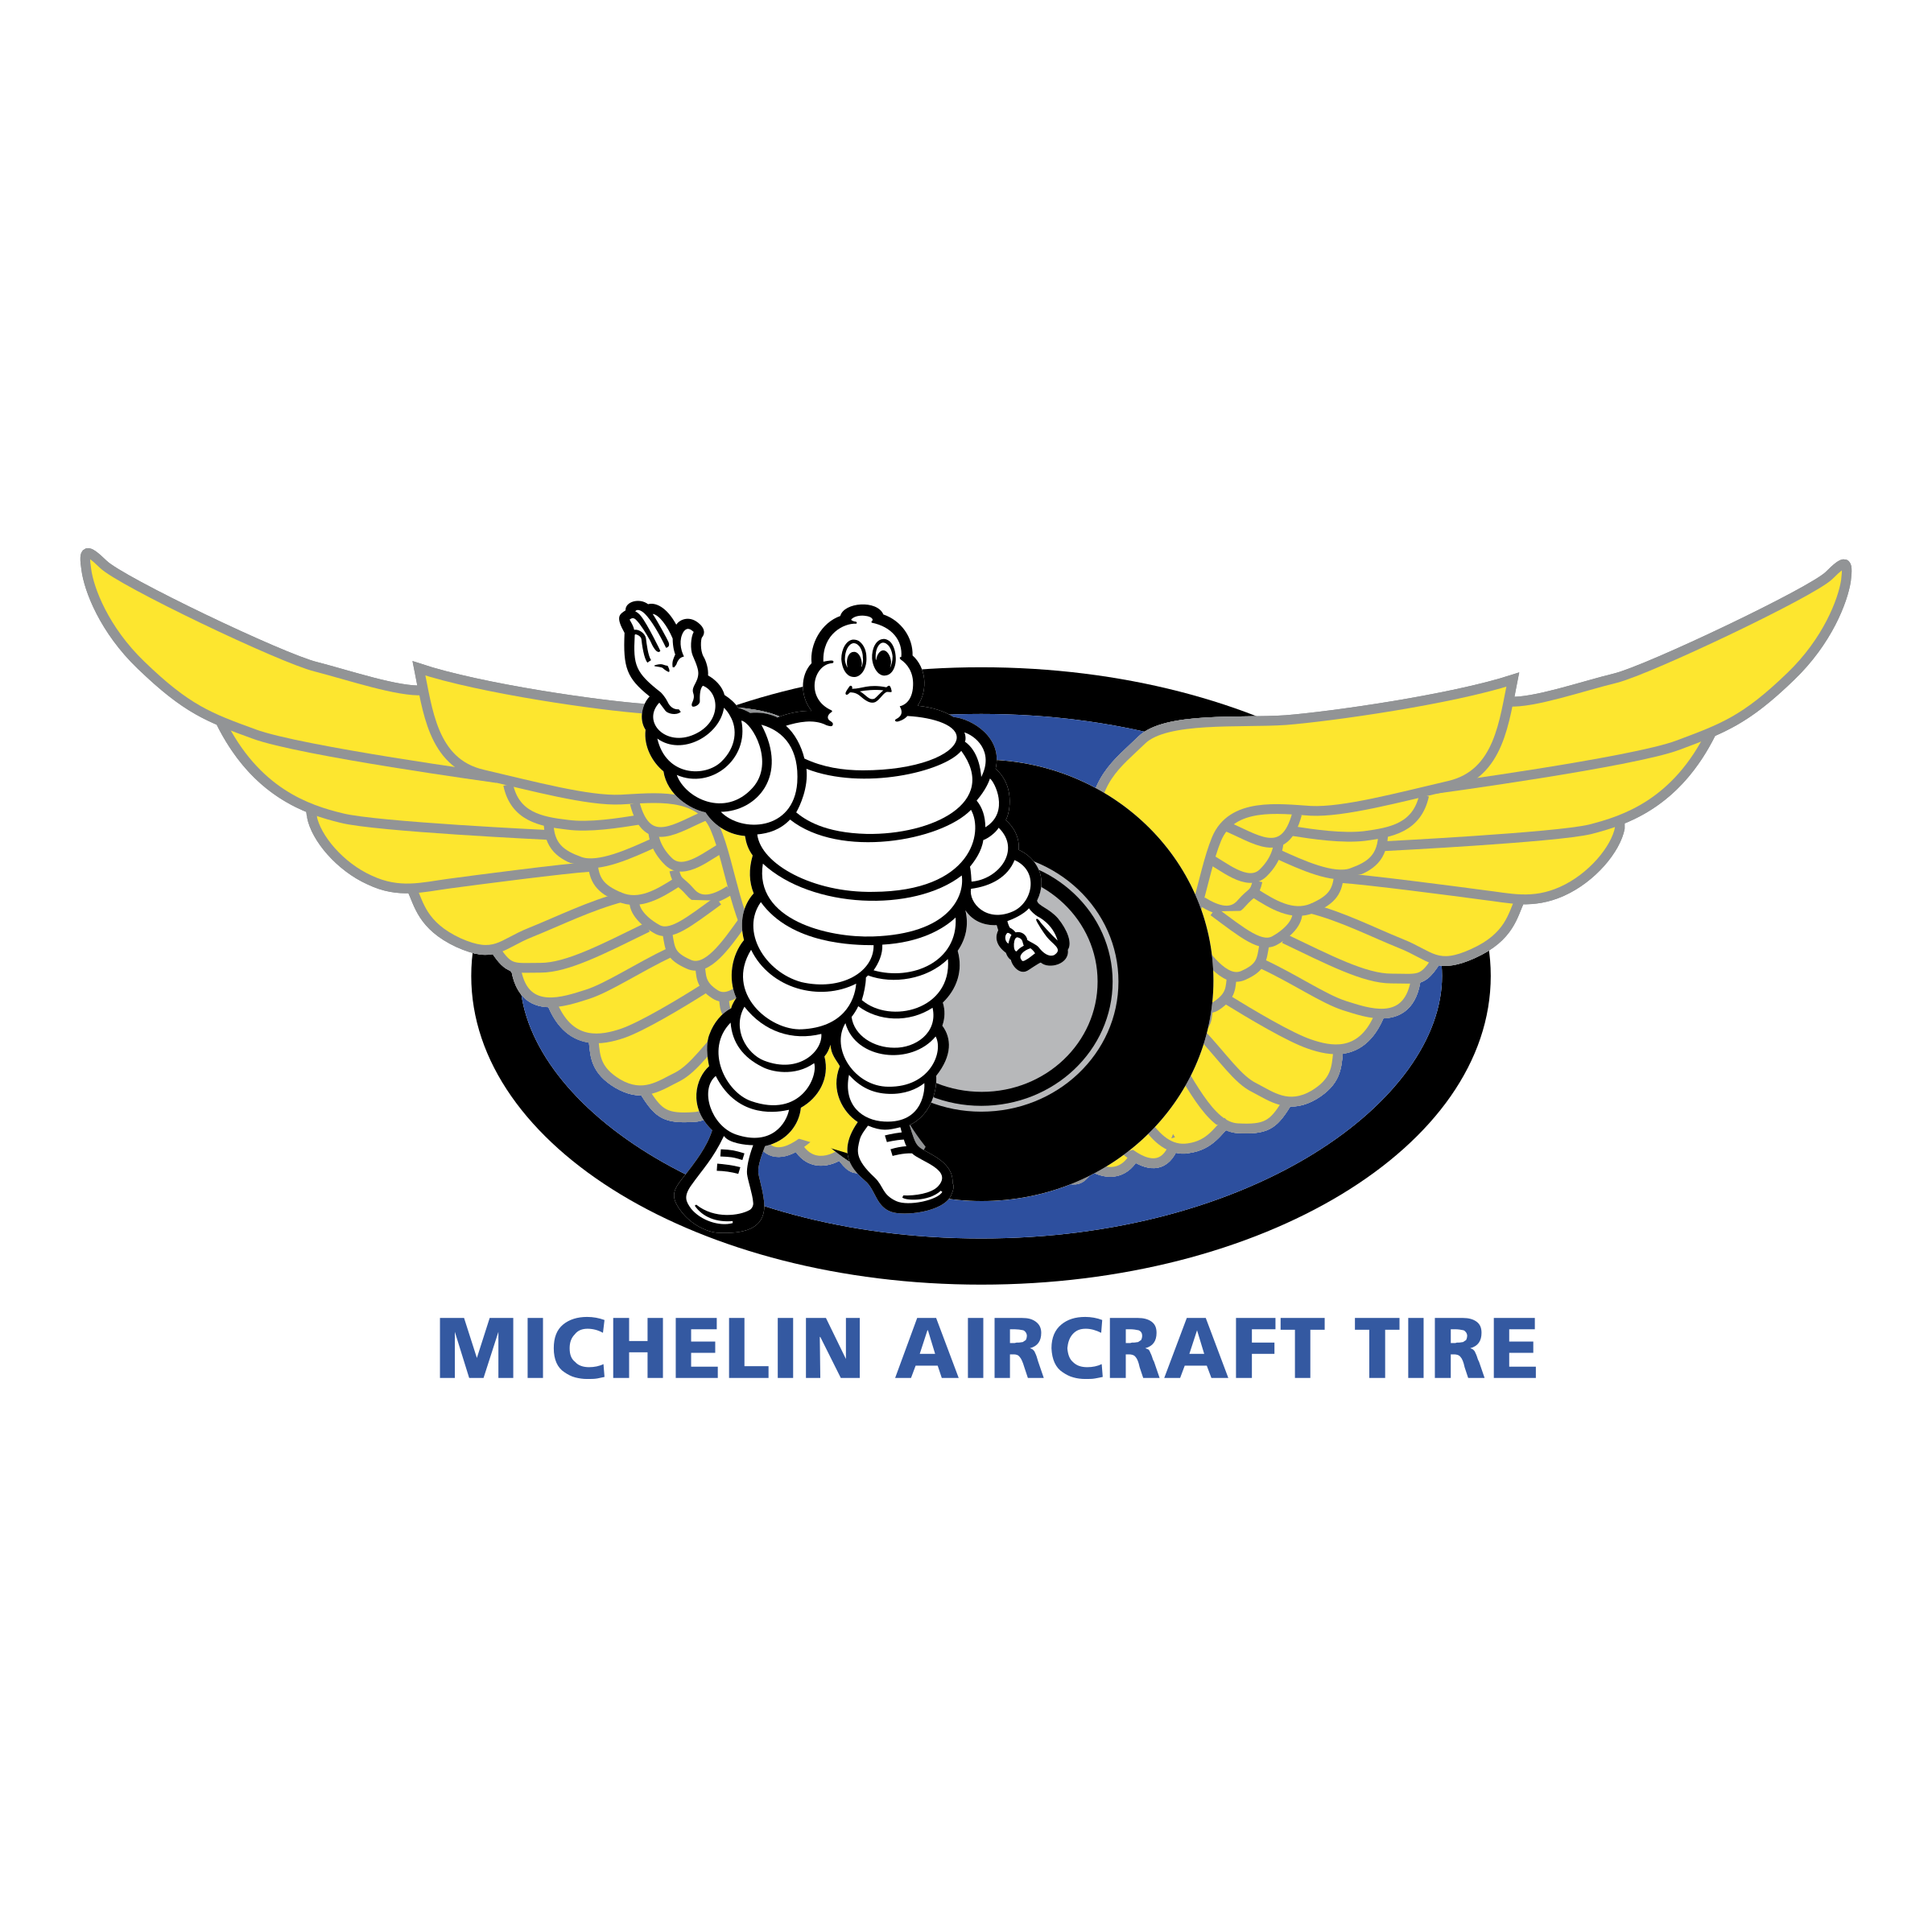 Michelin aircraft tire logo